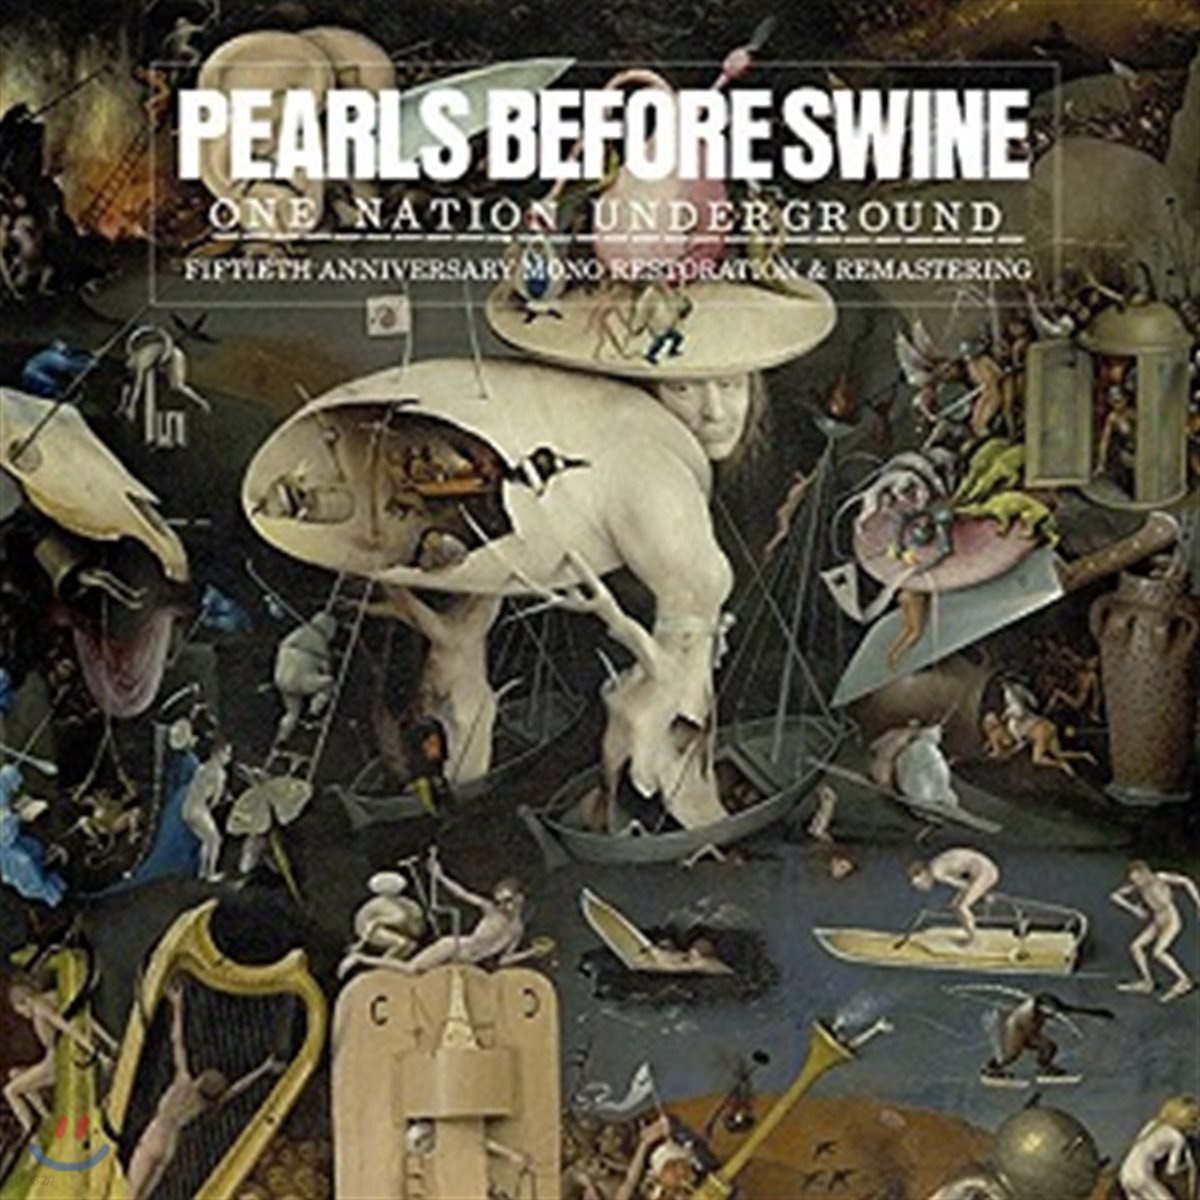 Pearls Before Swine (펄스 비포 스와인) - One Nation Underground